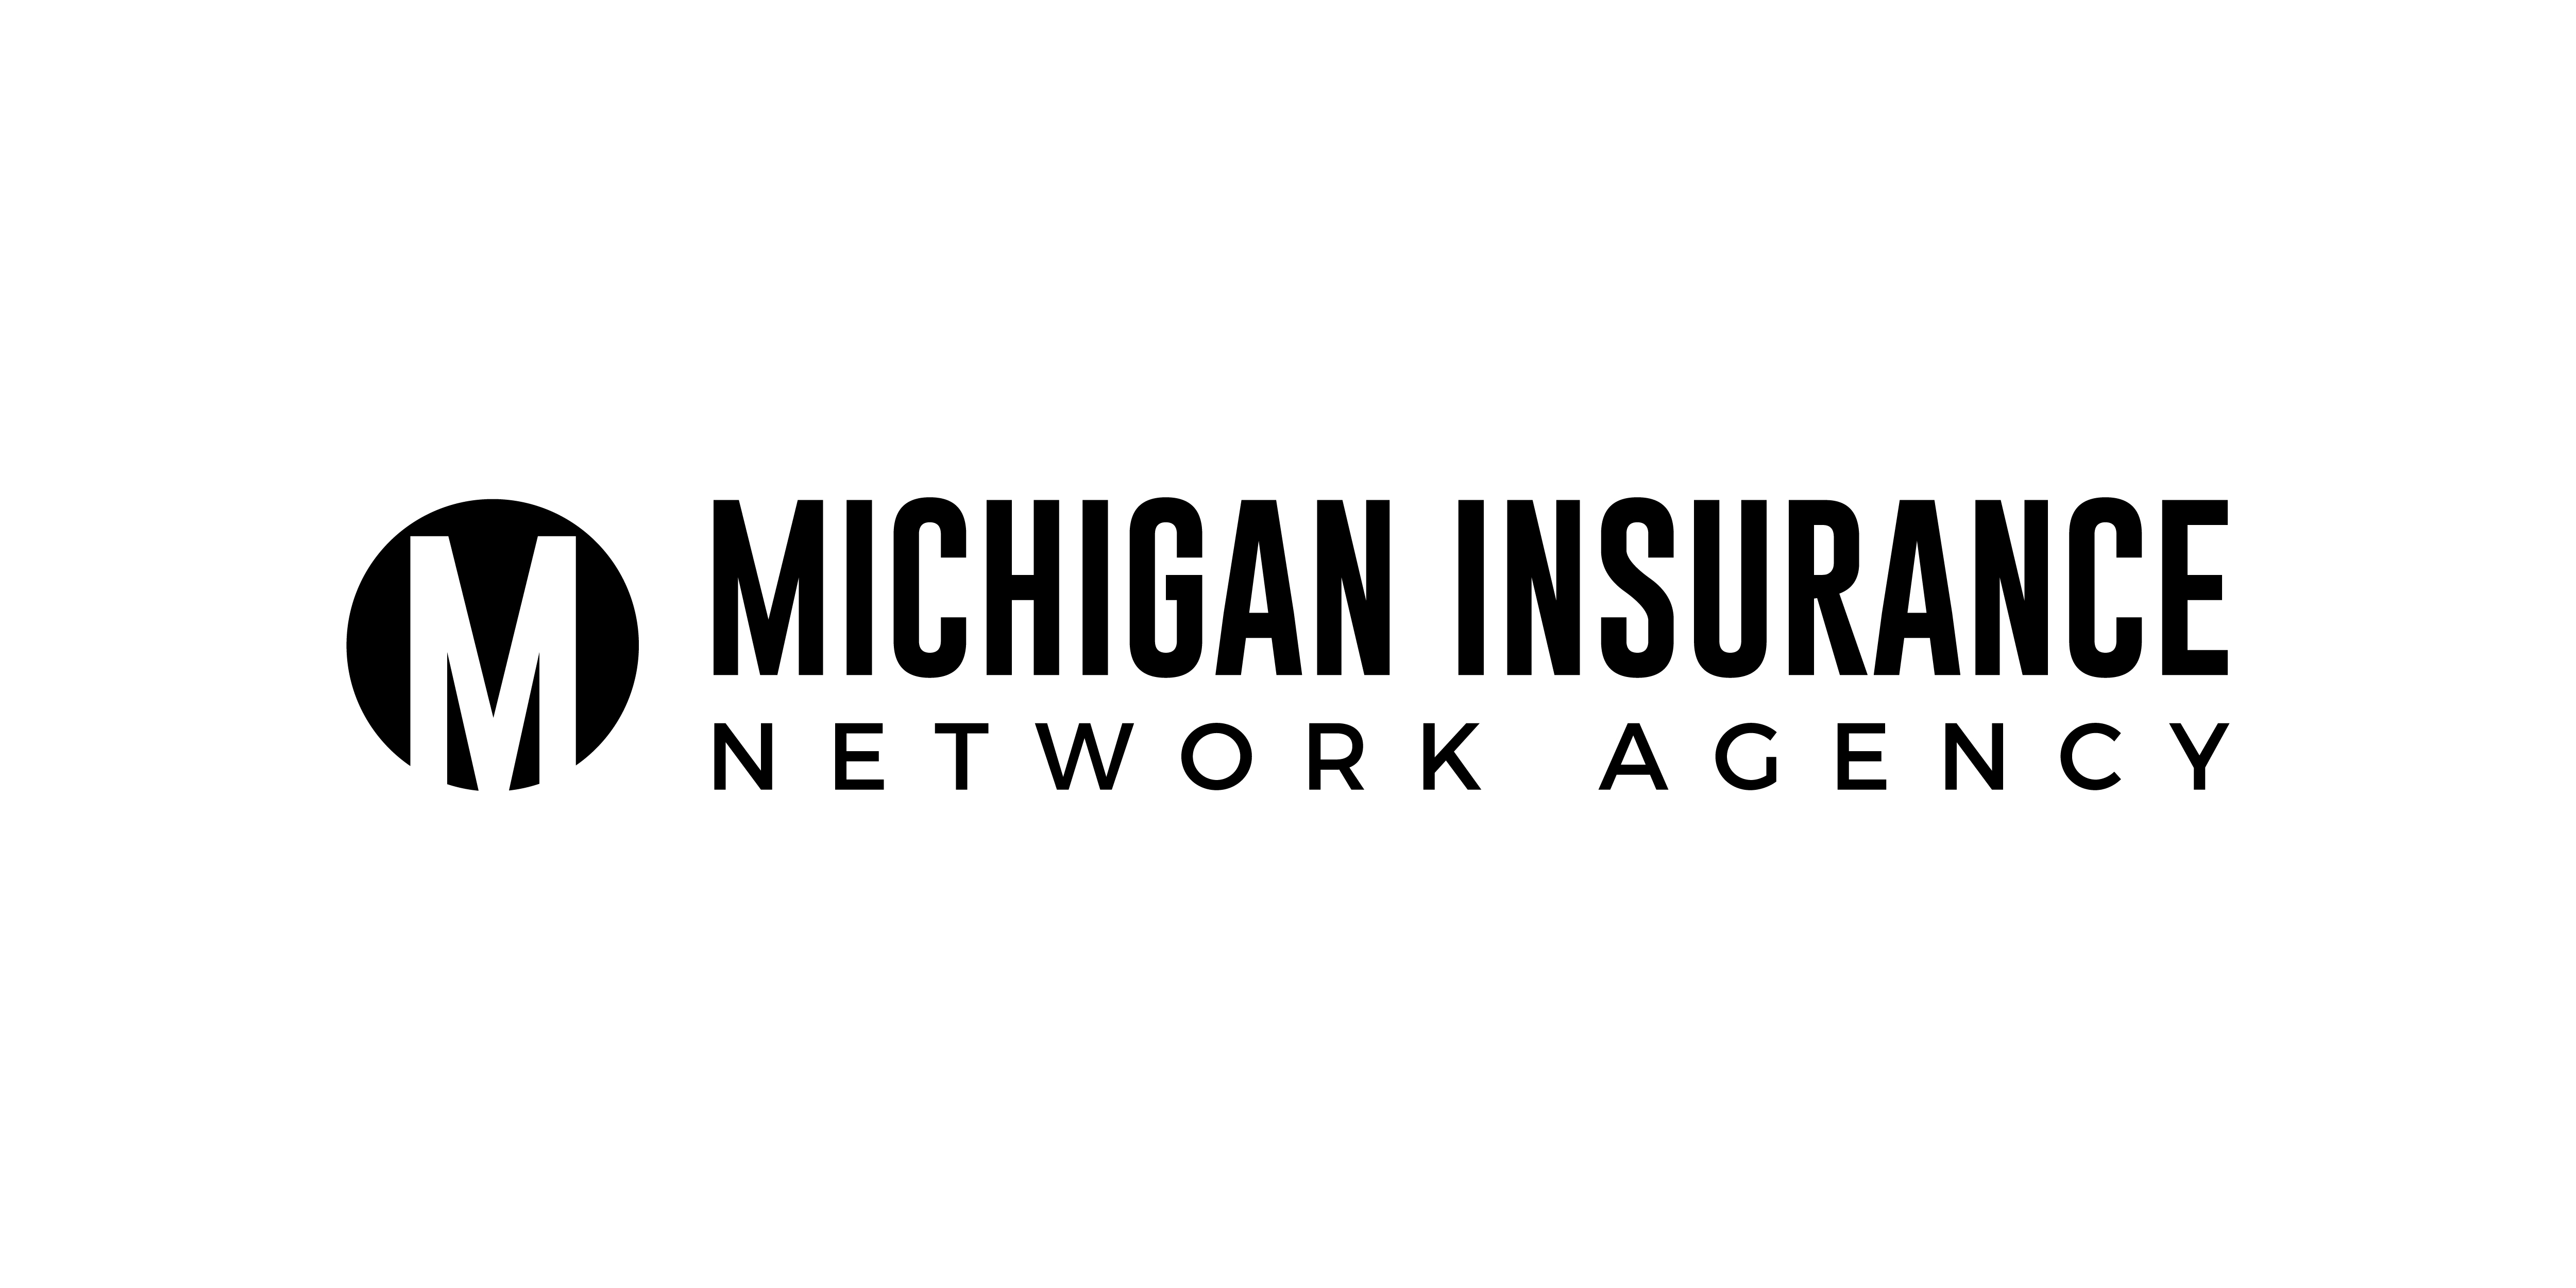 Michigan Insurance Network Agency